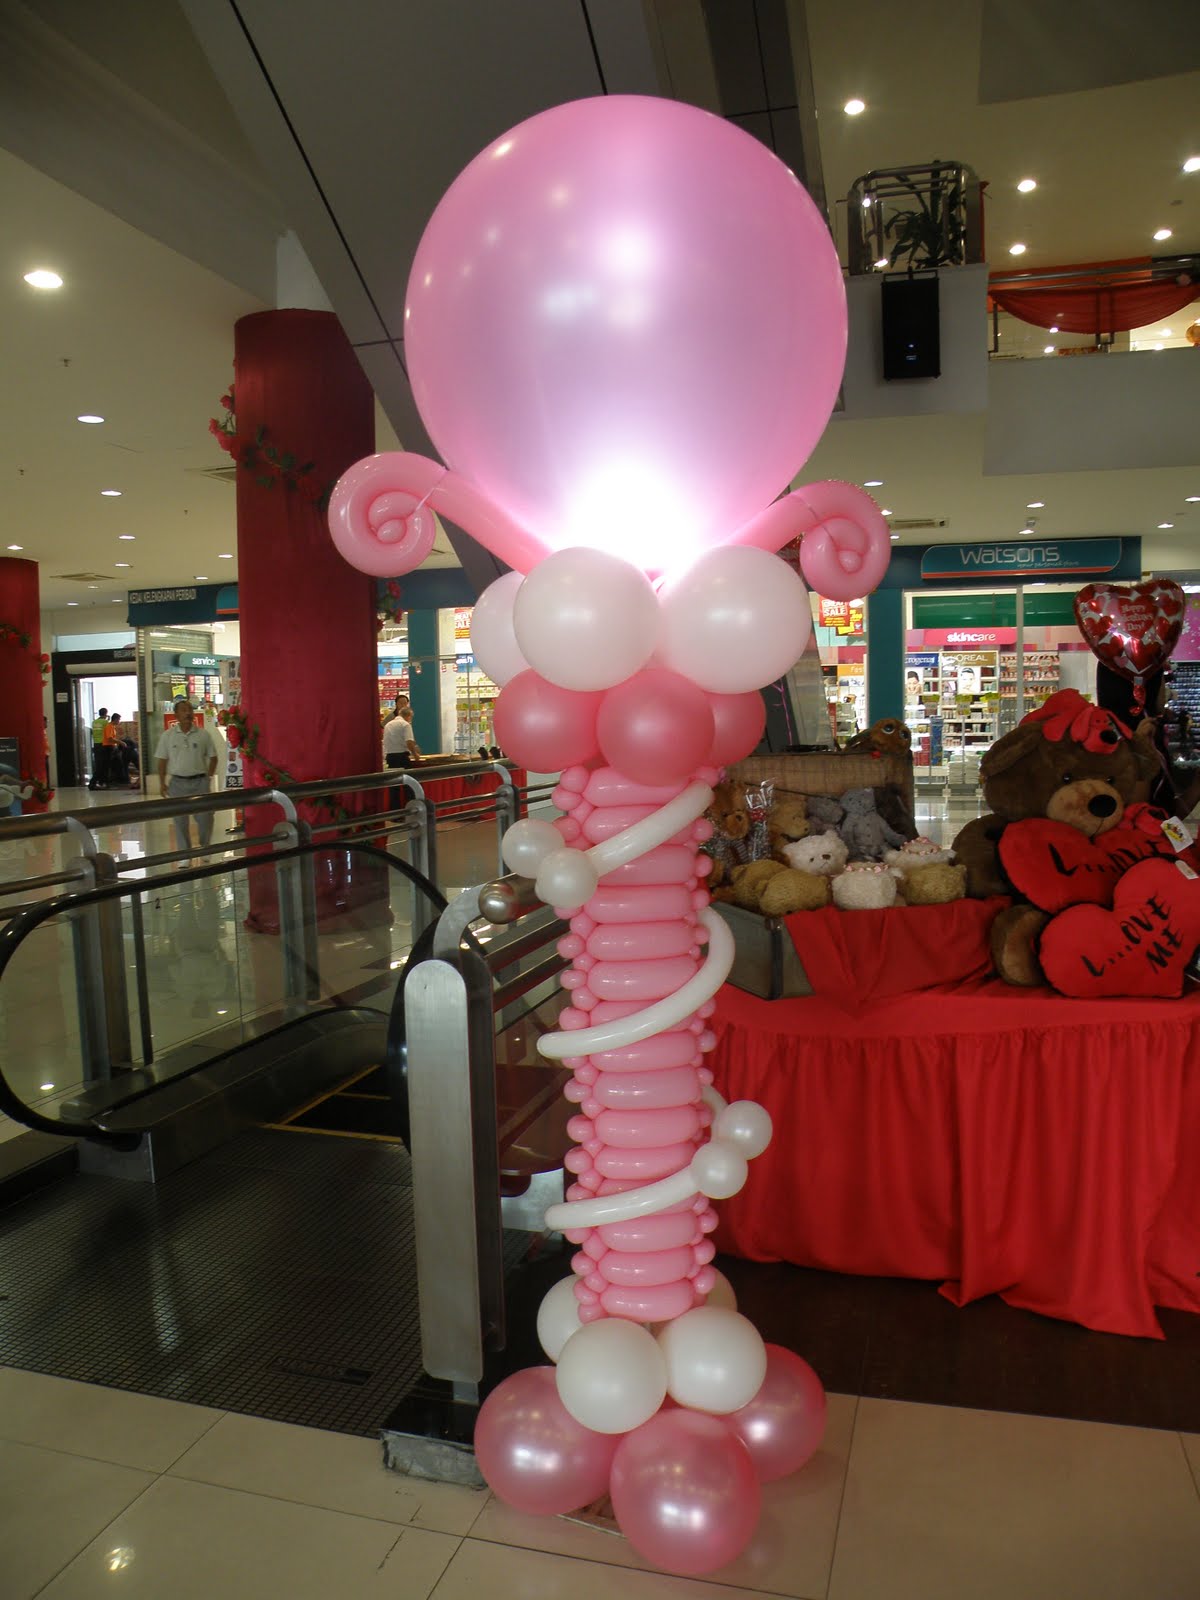 Balloon decorations for weddings, birthday parties, balloon sculptures